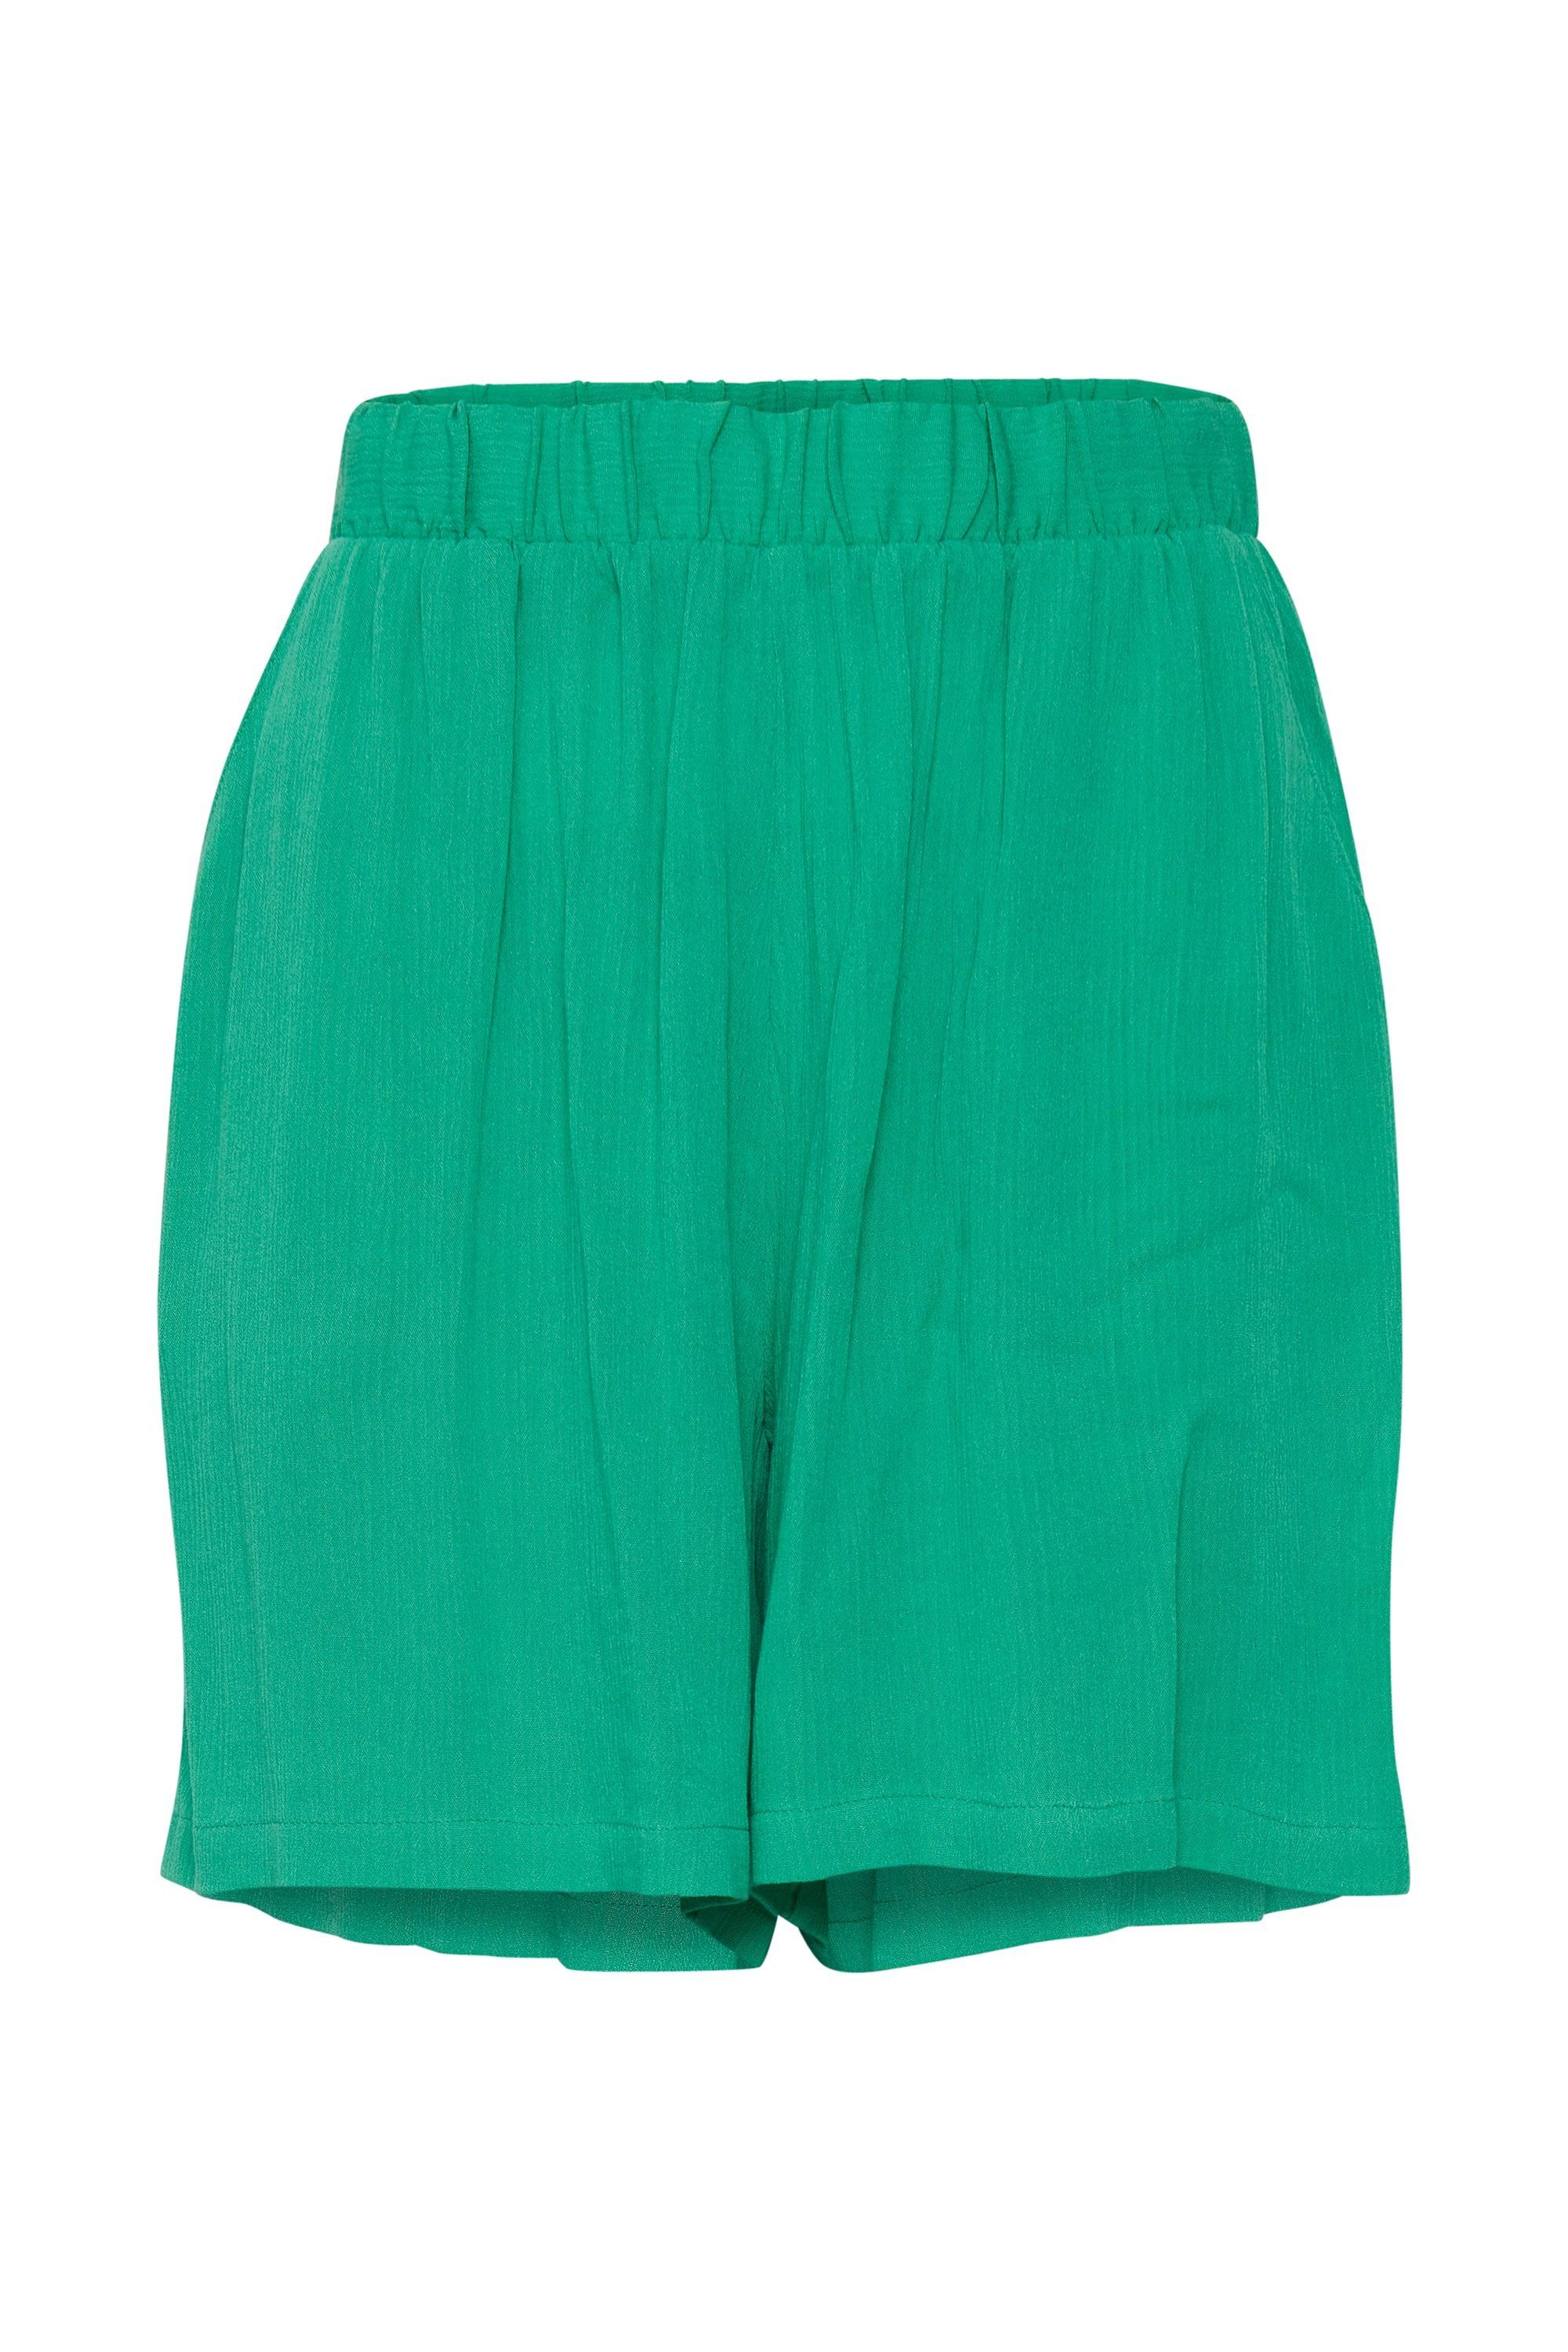 20111455 Holly Ichi - (165932) SHO3 SO IHMARRAKECH Green Shorts